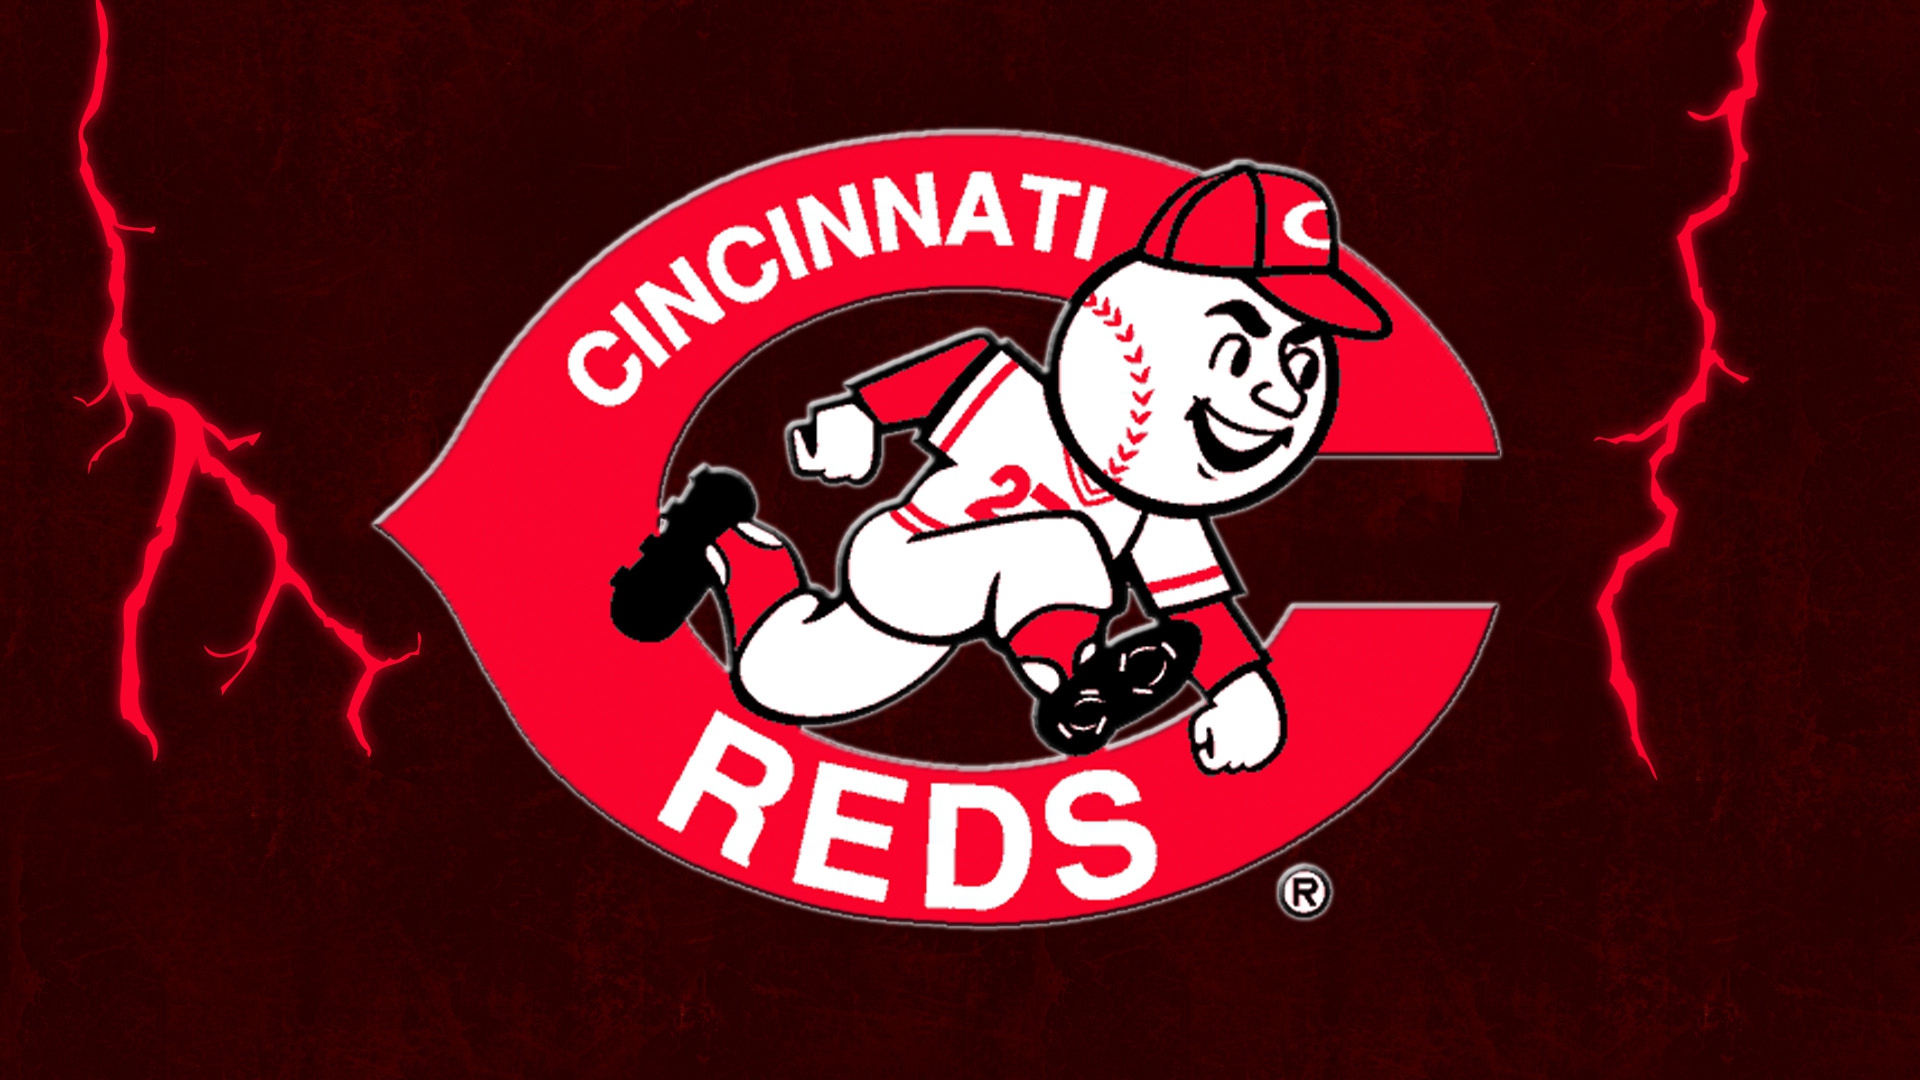 Cincinnati Reds Wallpaper Image Photos Pictures Background